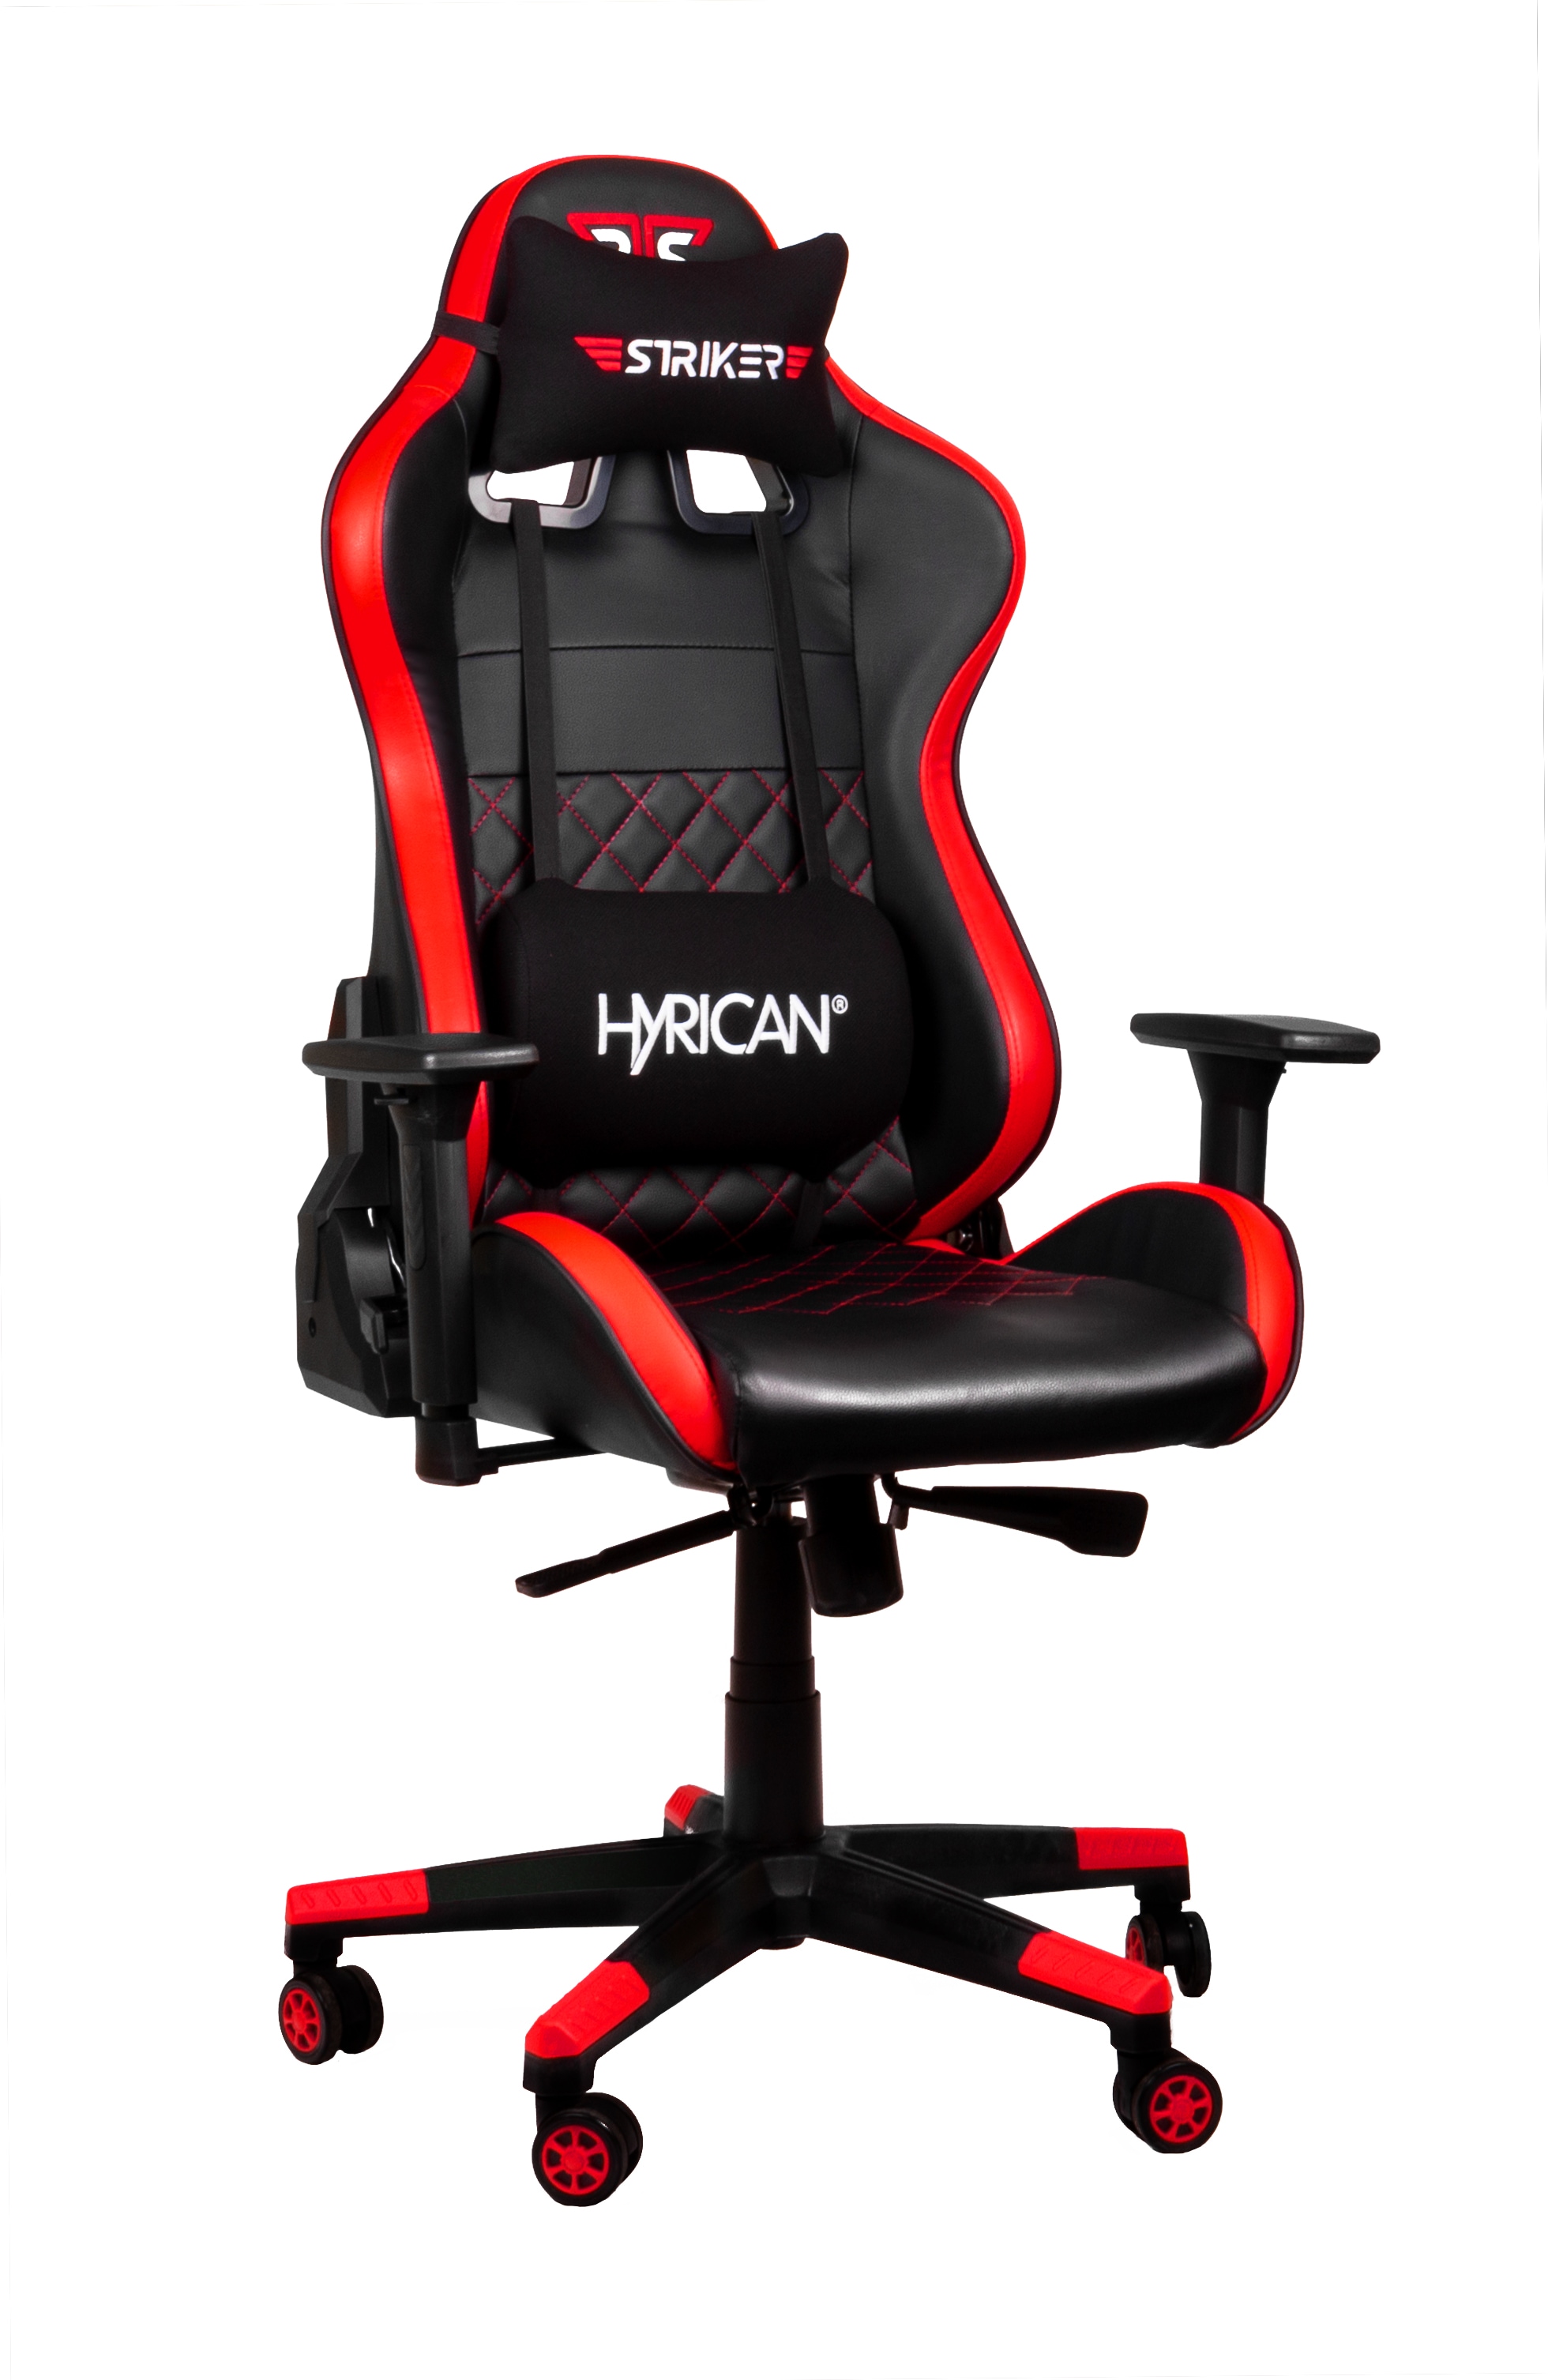 Hyrican Gaming-Stuhl »Striker XL\